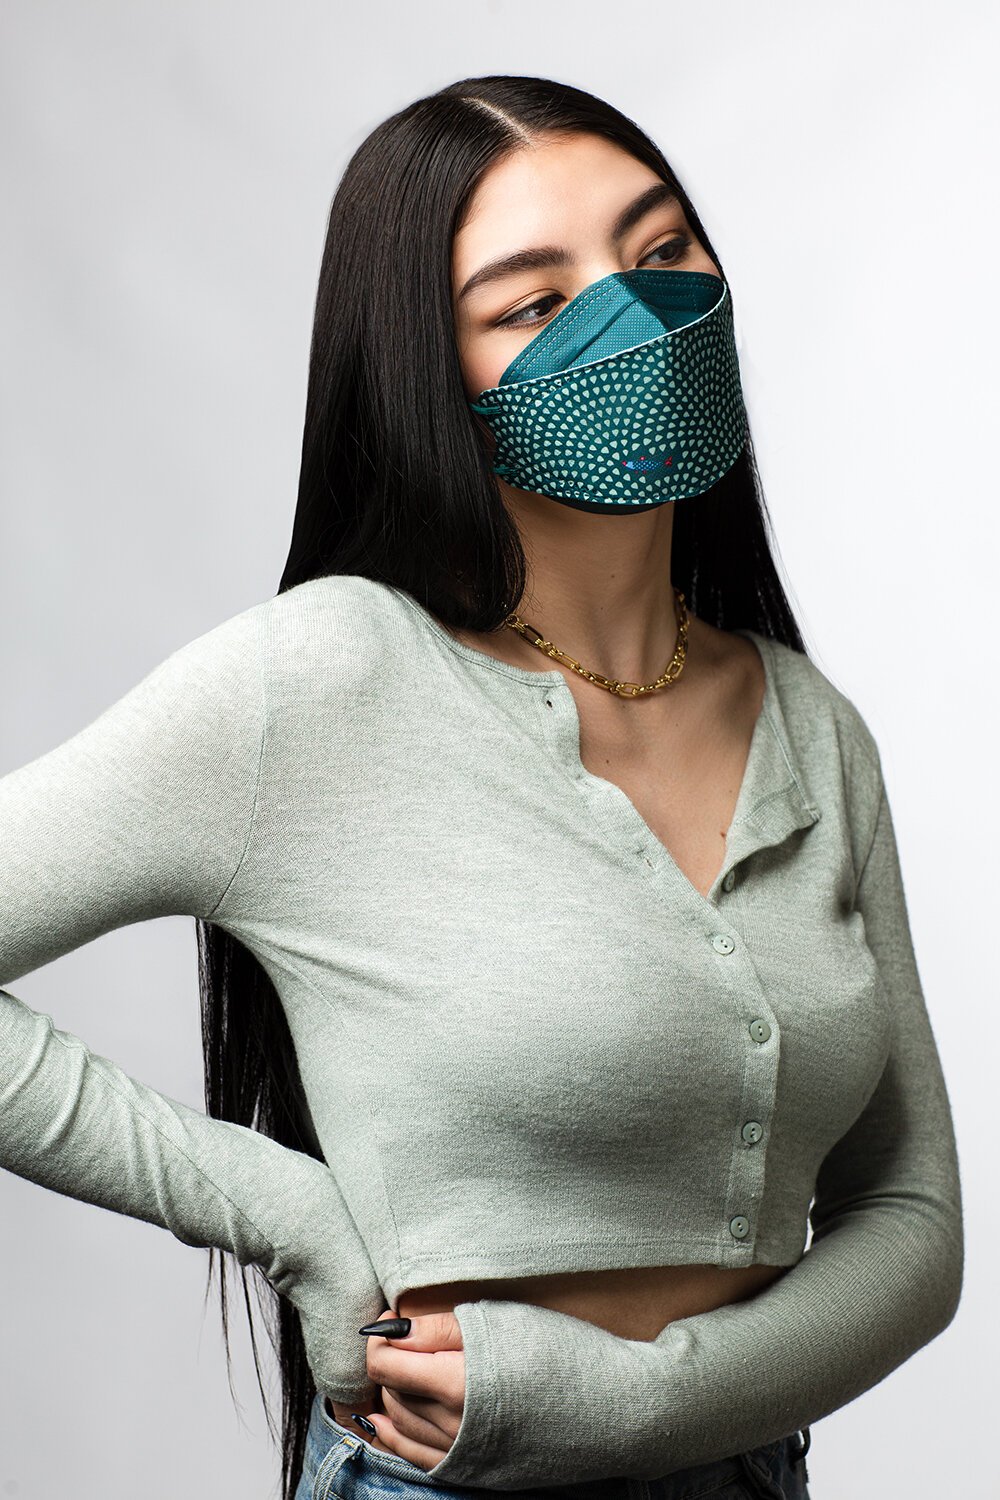 face mask girl cool young fashion studio photography hong kong print.jpg